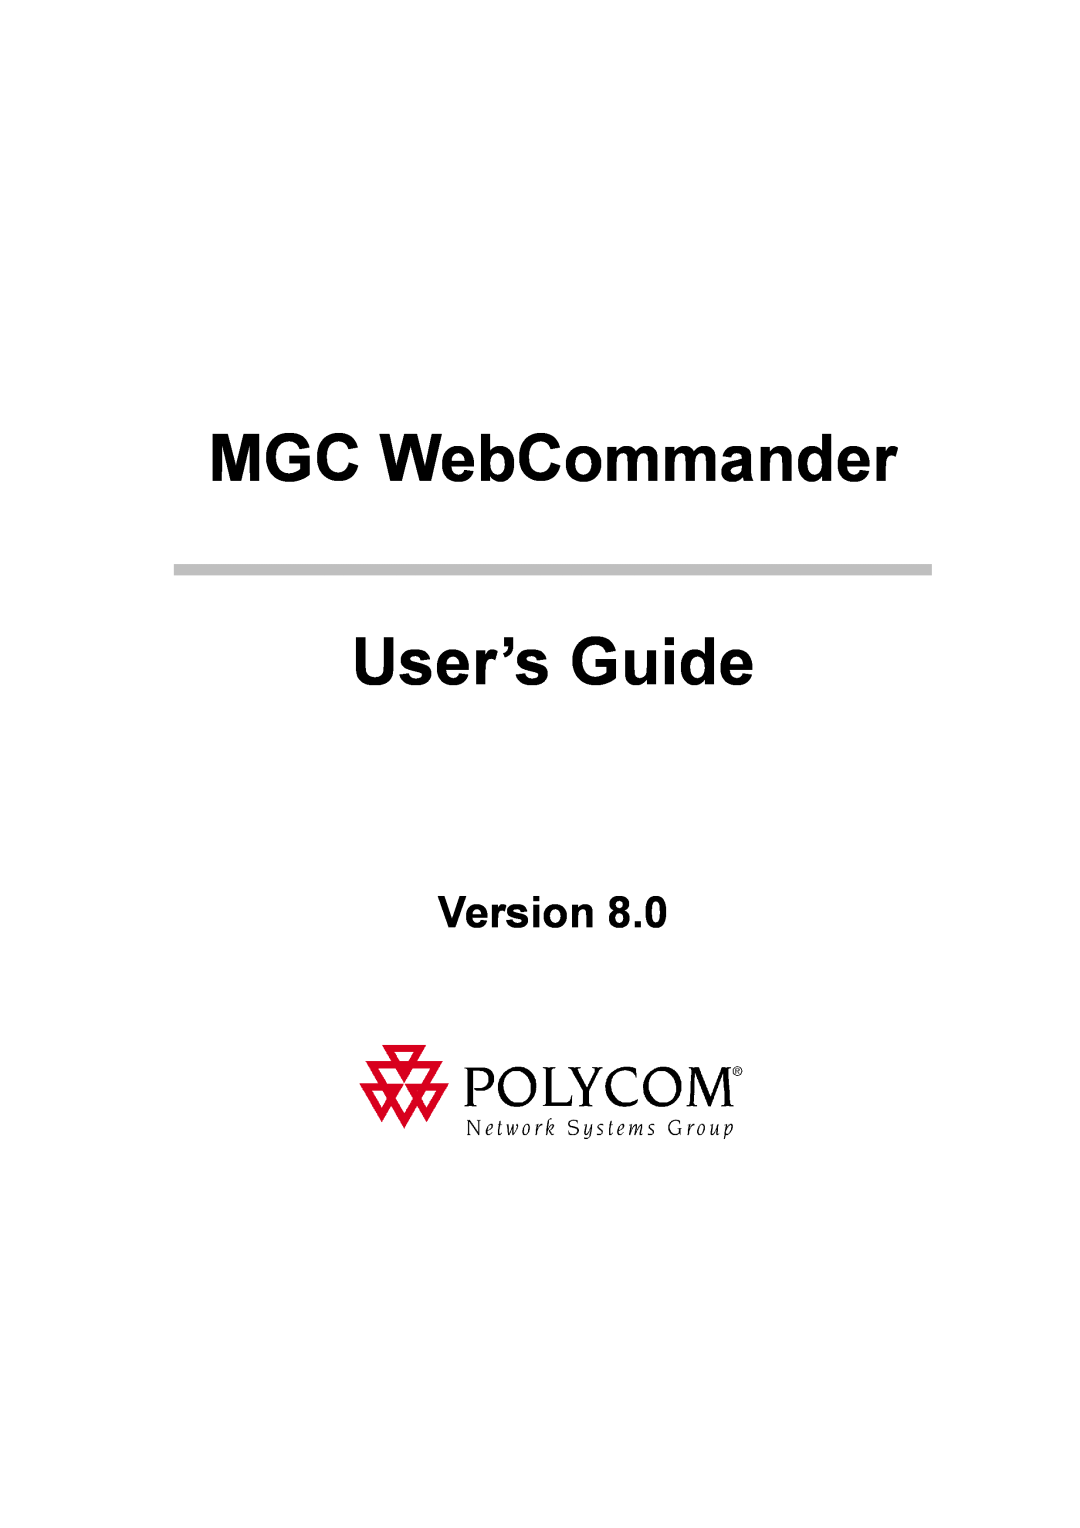 Polycom 8 manual Version, MGC WebCommander User’s Guide 